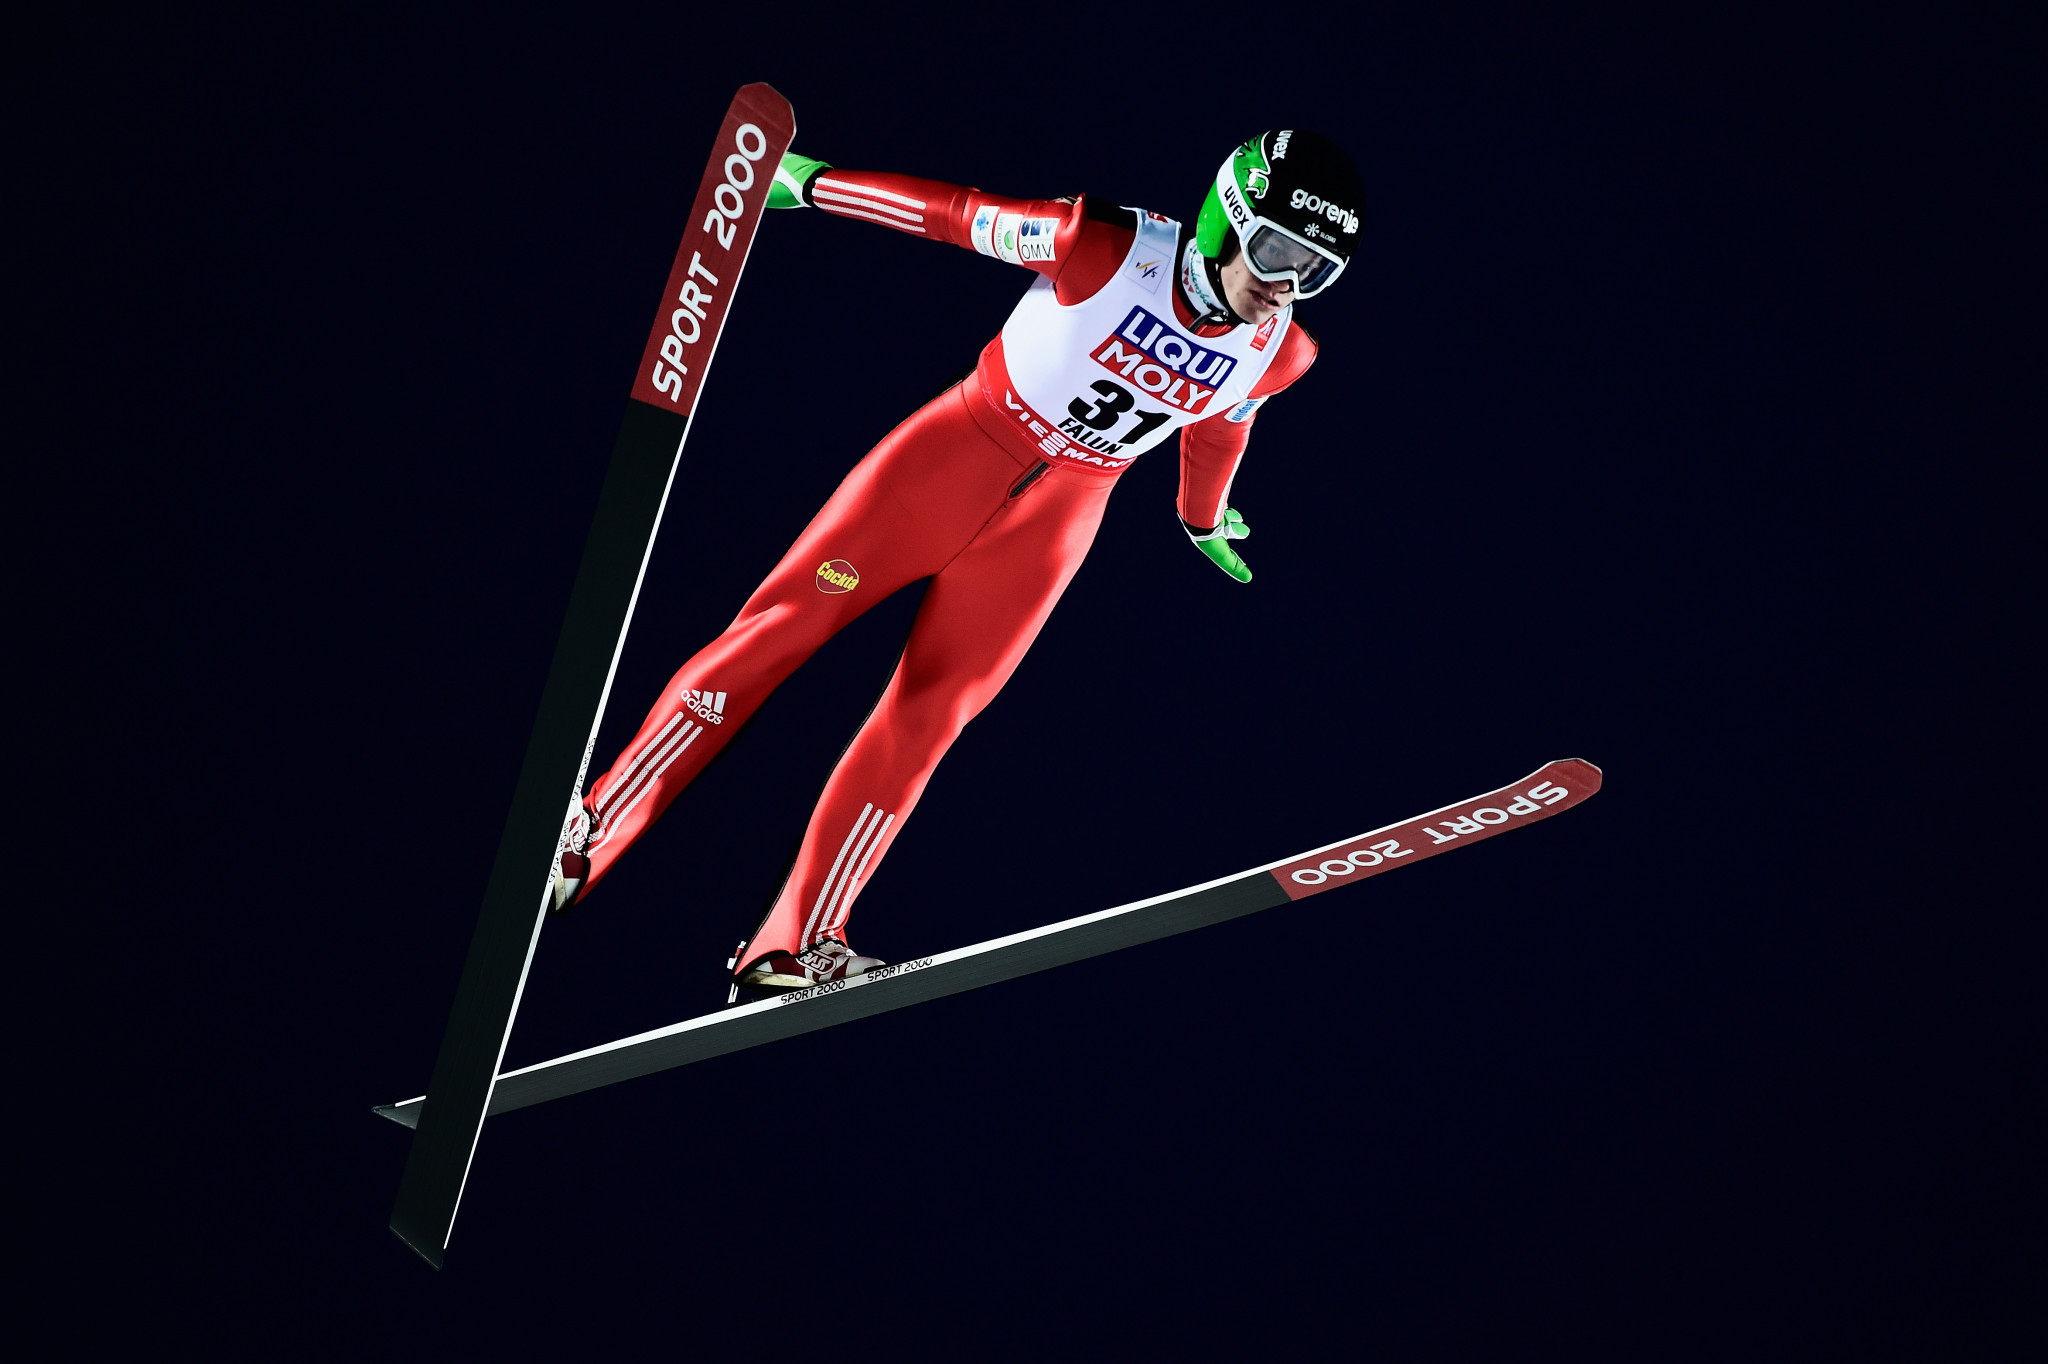 Ski jumper Pungertar announces retirement